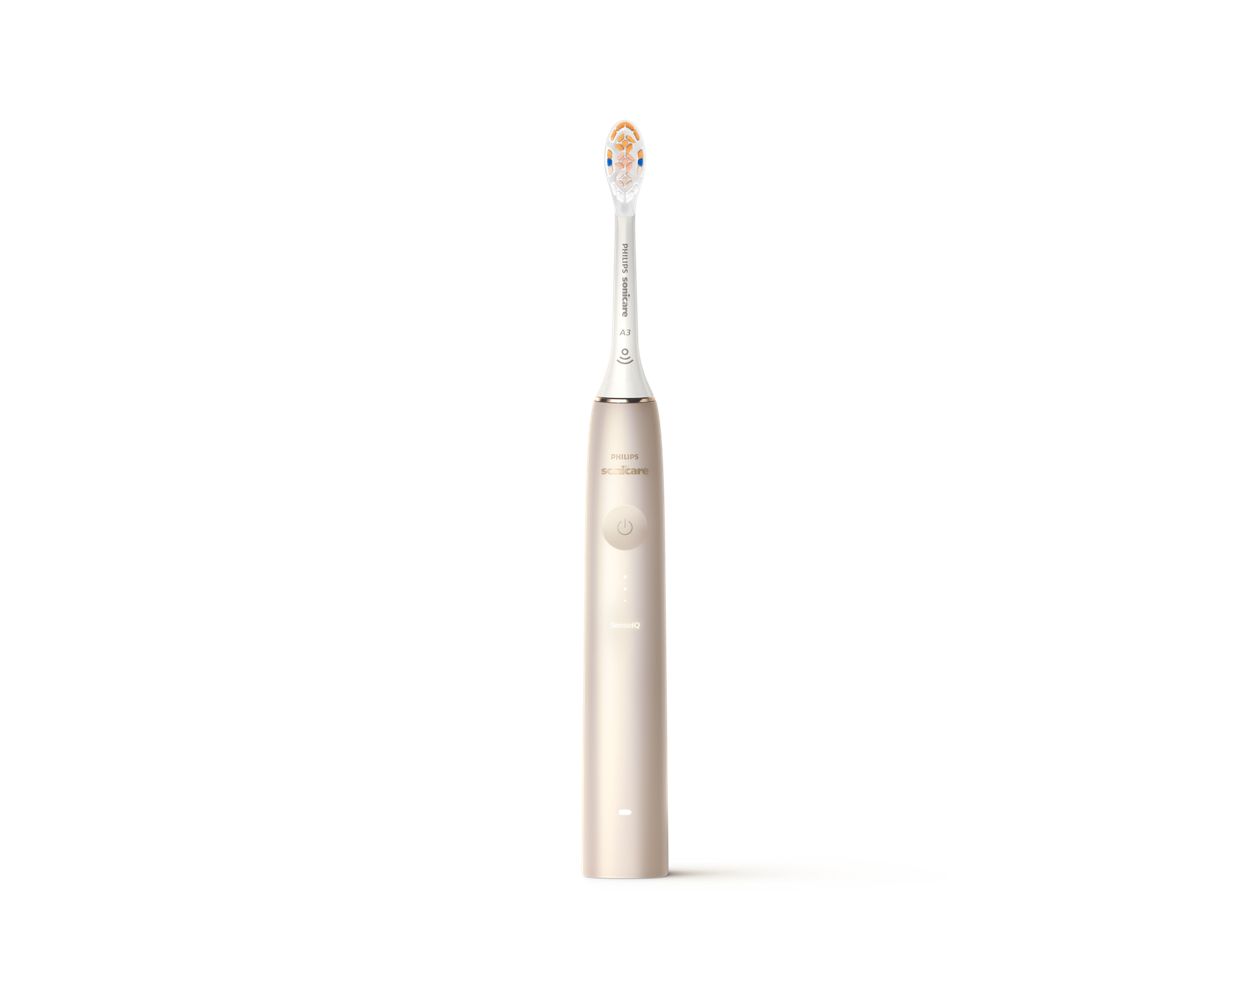 Prestige 9900 Power Toothbrush with SenseIQ HX9990/11 | Sonicare